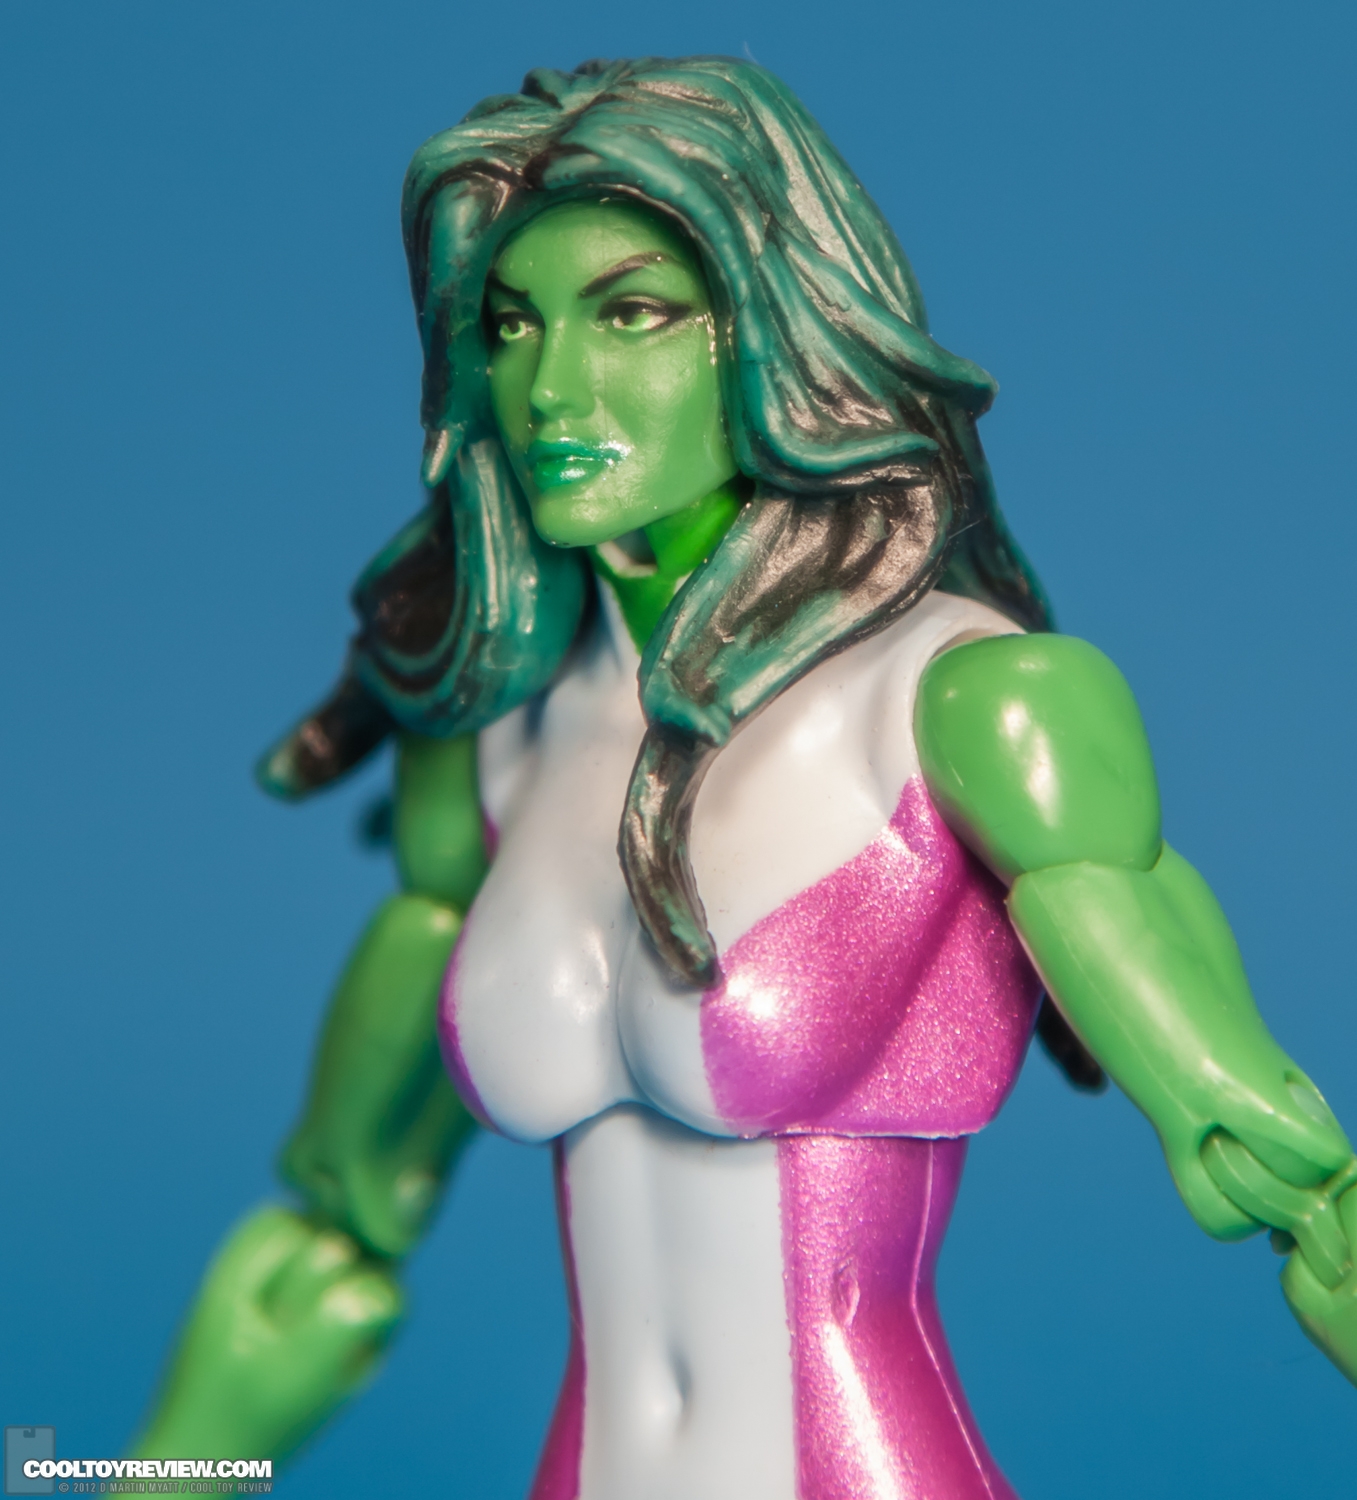 She-Hulk_Marvel_Universe_Hasbro-07.jpg